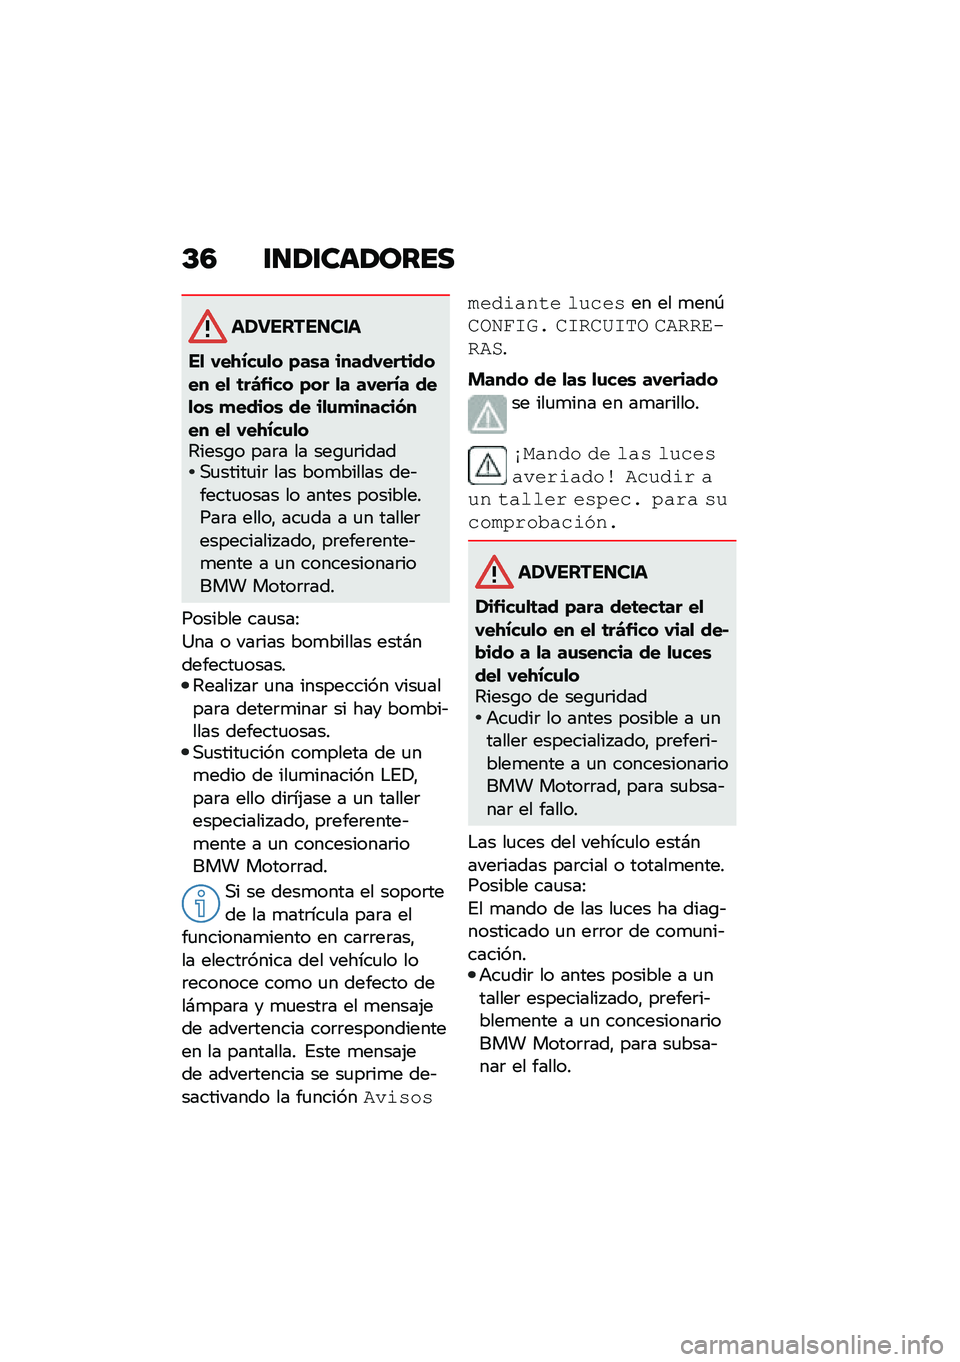 BMW MOTORRAD M 1000 RR 2021  Manual de instrucciones (in Spanish) �D�4 �\f�
�1�\f���1����
�����������
��
 �,��-�.��\f�
� �(��\b� �����,���	����� ��
 �	��F�&��� �(�� �
� ��,���.� ���
��\b �
�����\b �� ��
�\f�
�